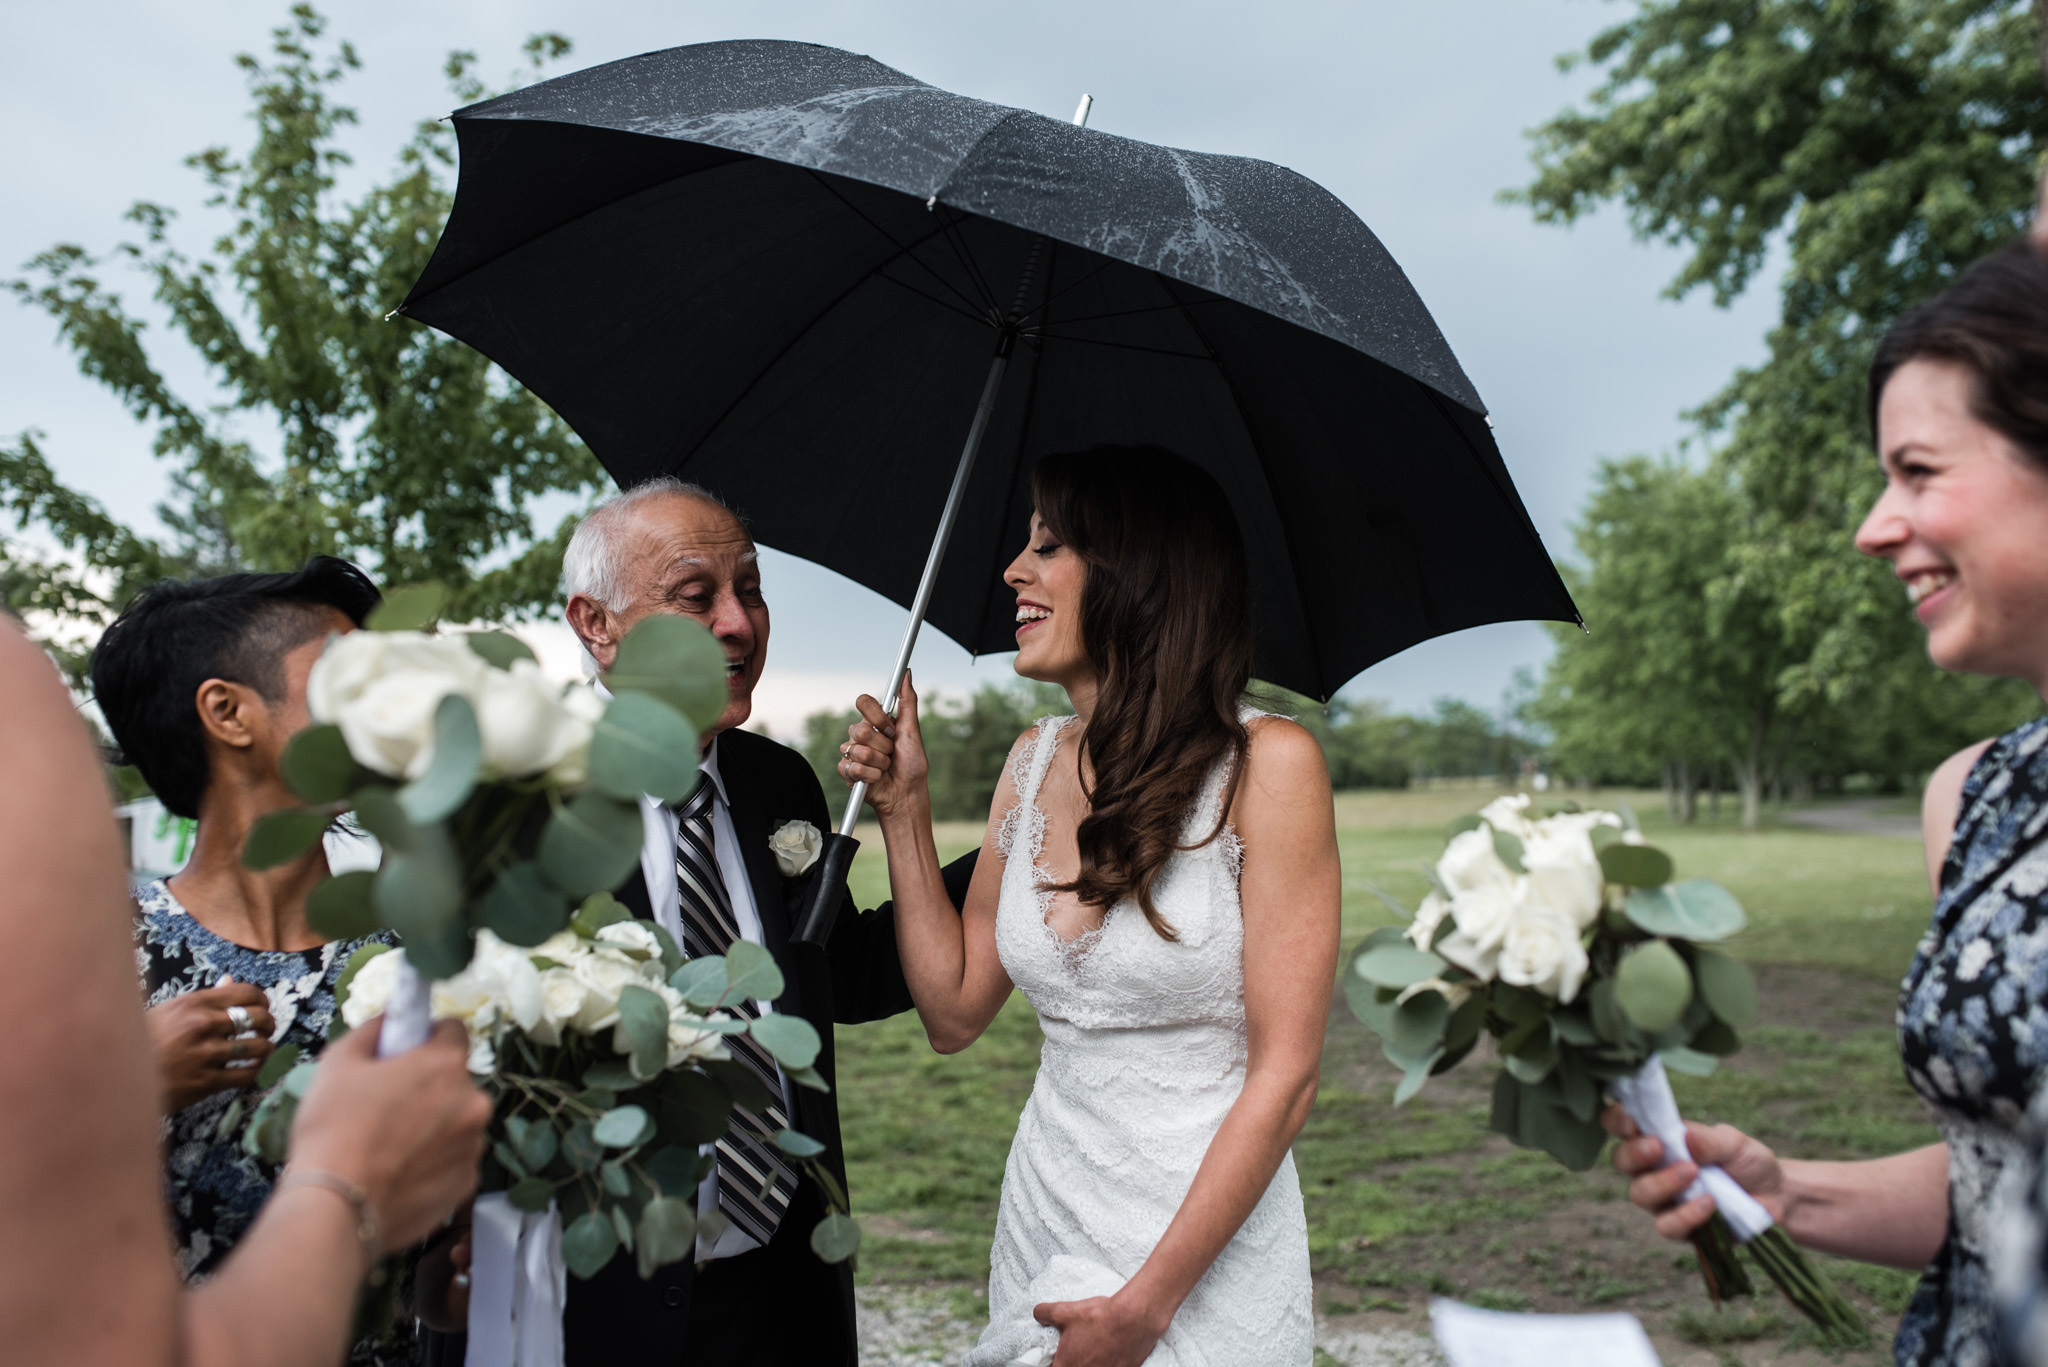 131-wedding-ceremony-in-the-rain-toronto-photographer.jpg